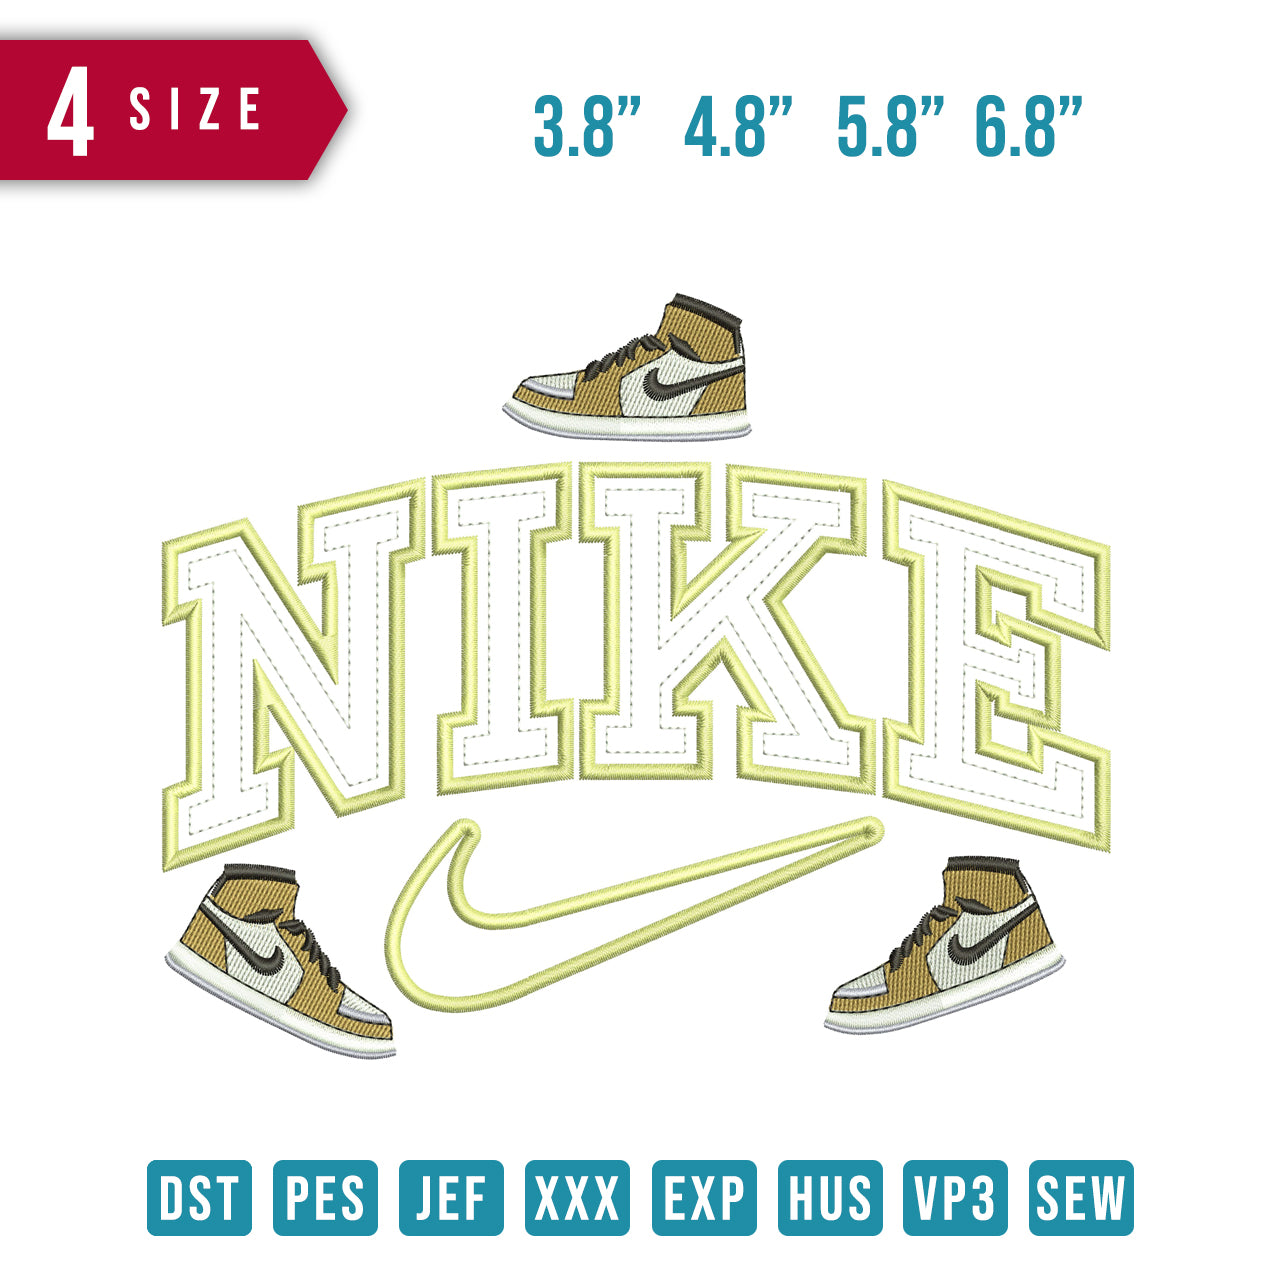 Nike 3 Shoes